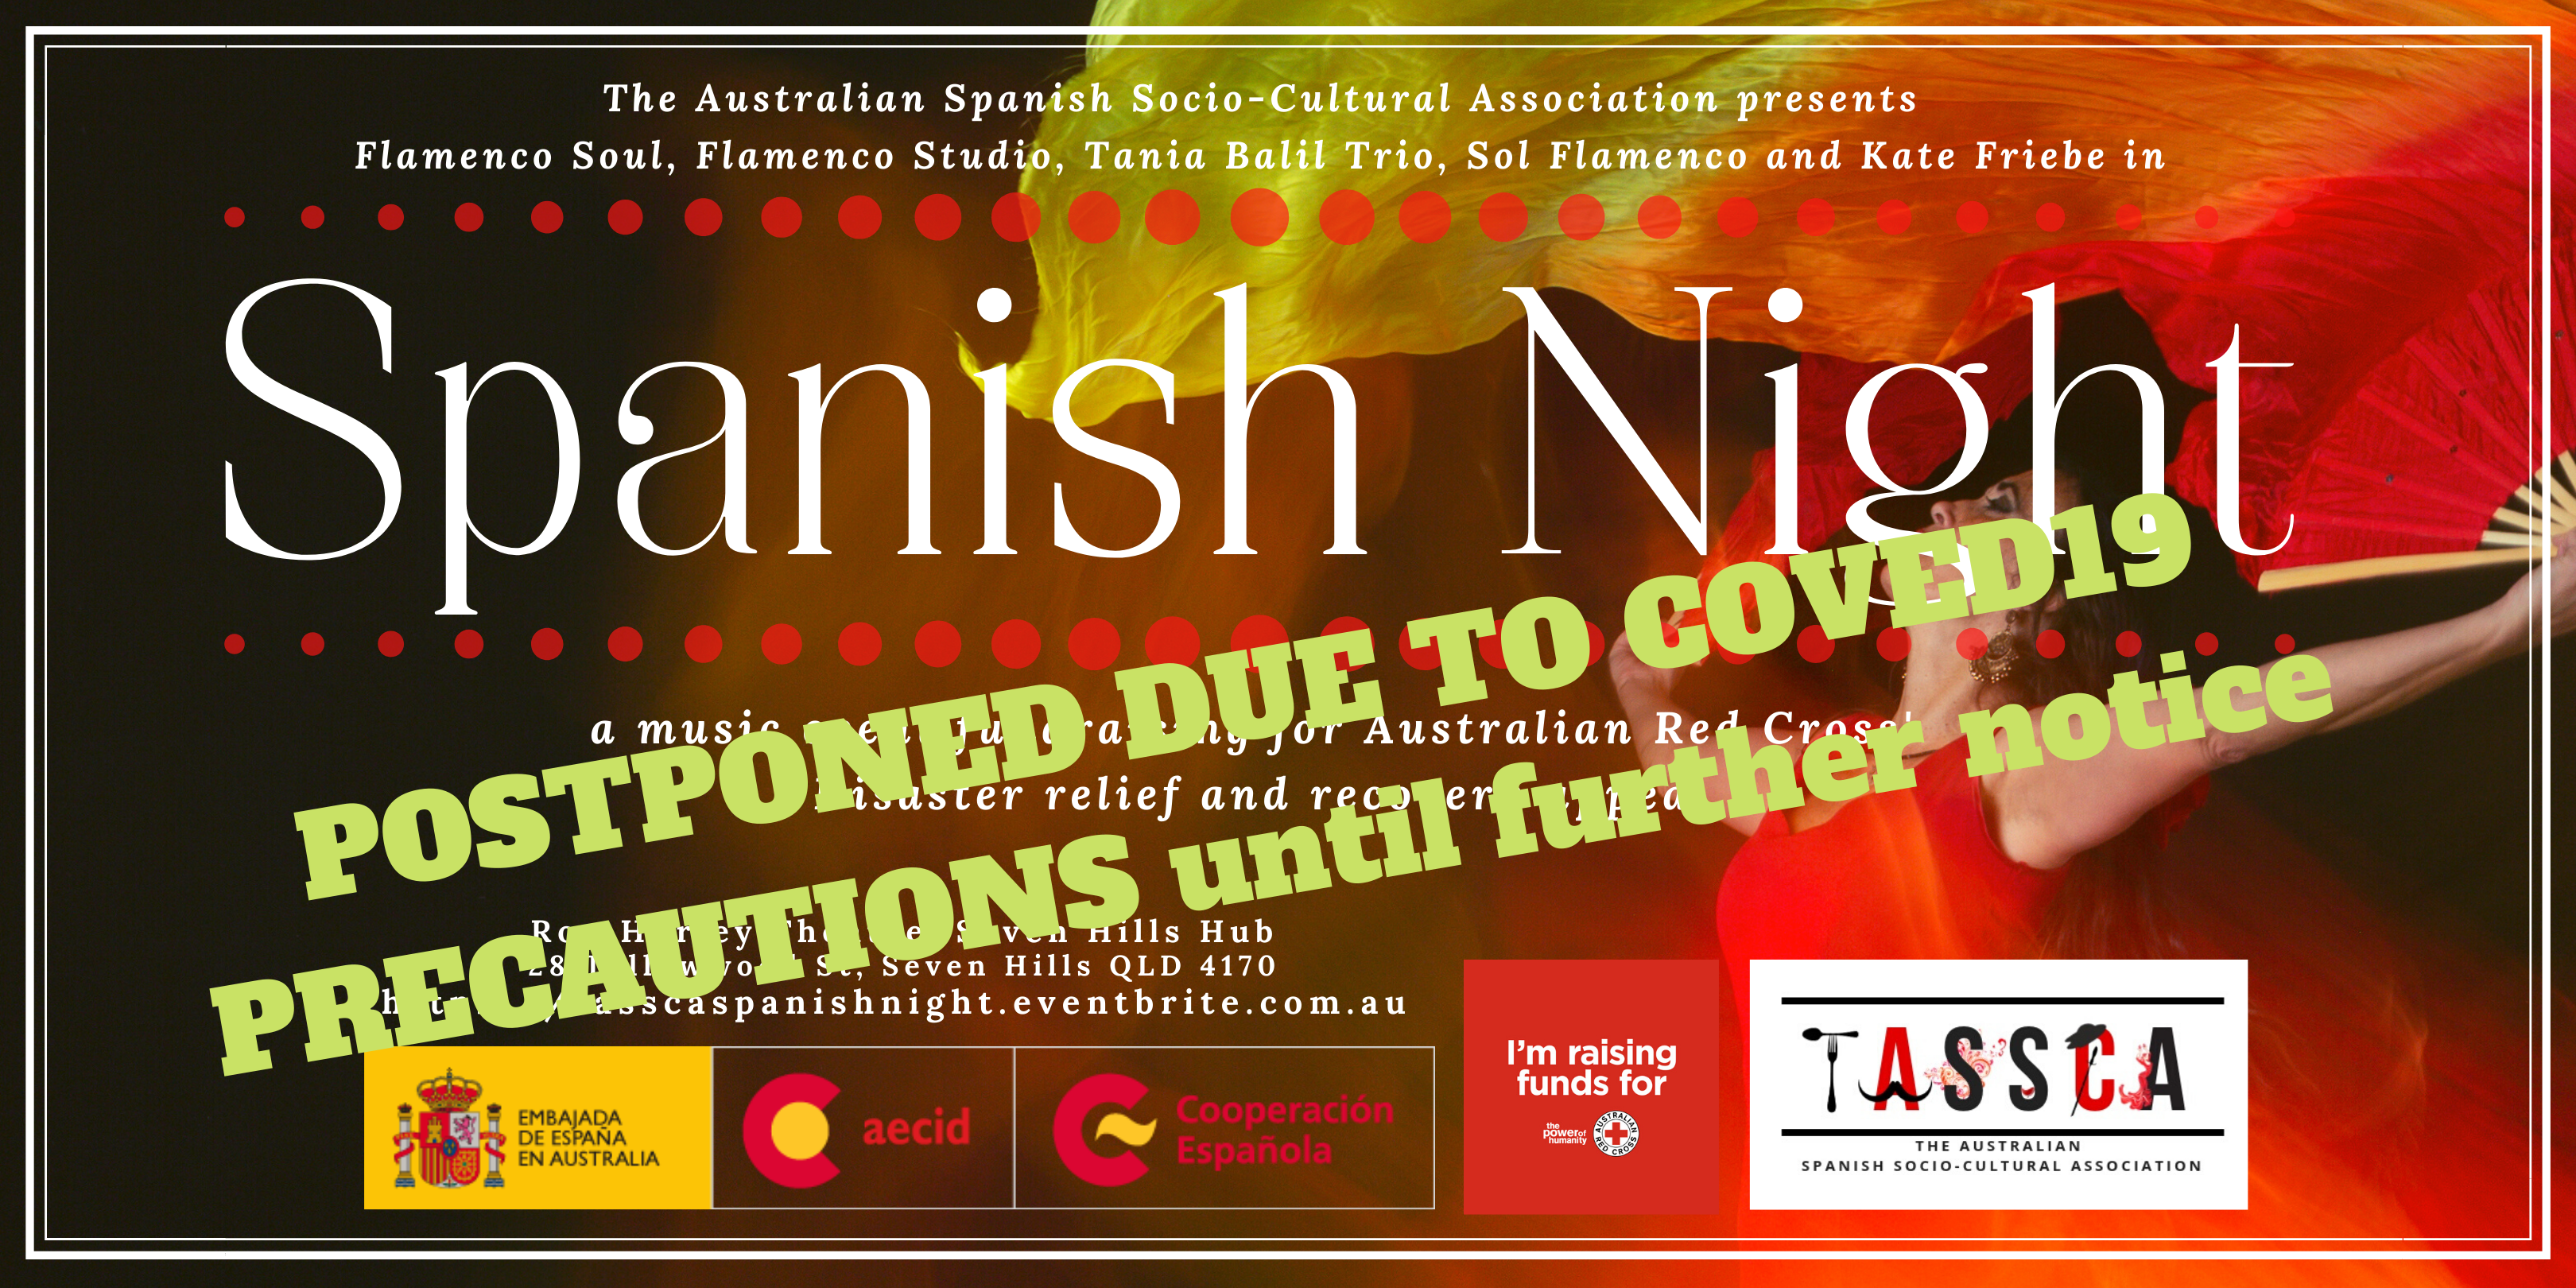 POSTPONED Spanish Night: Fundraising event for the Australian Red Cross